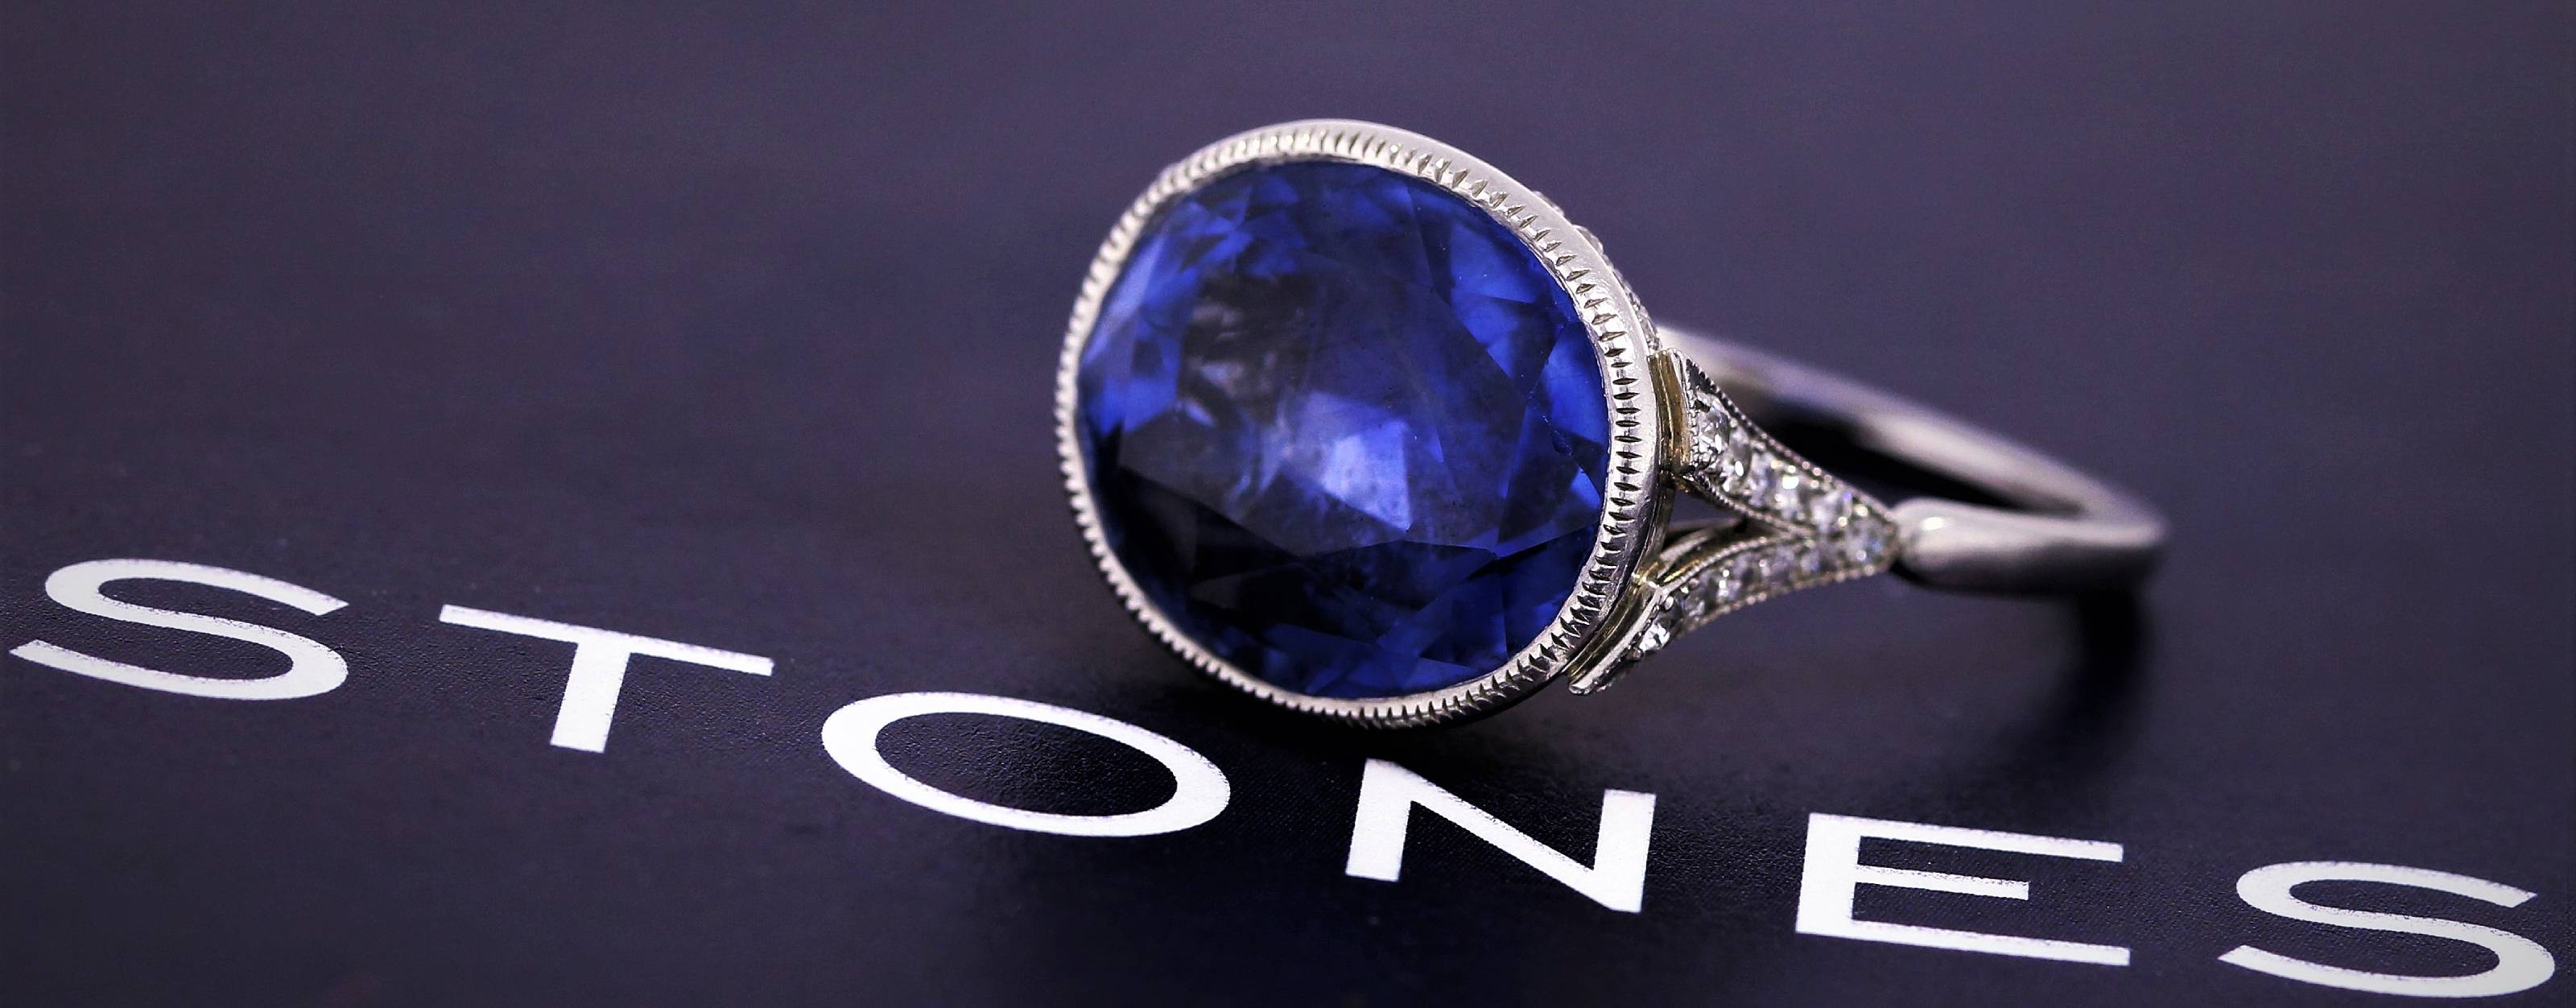 9.87 carat Antique Ceylon Sapphire Ring large